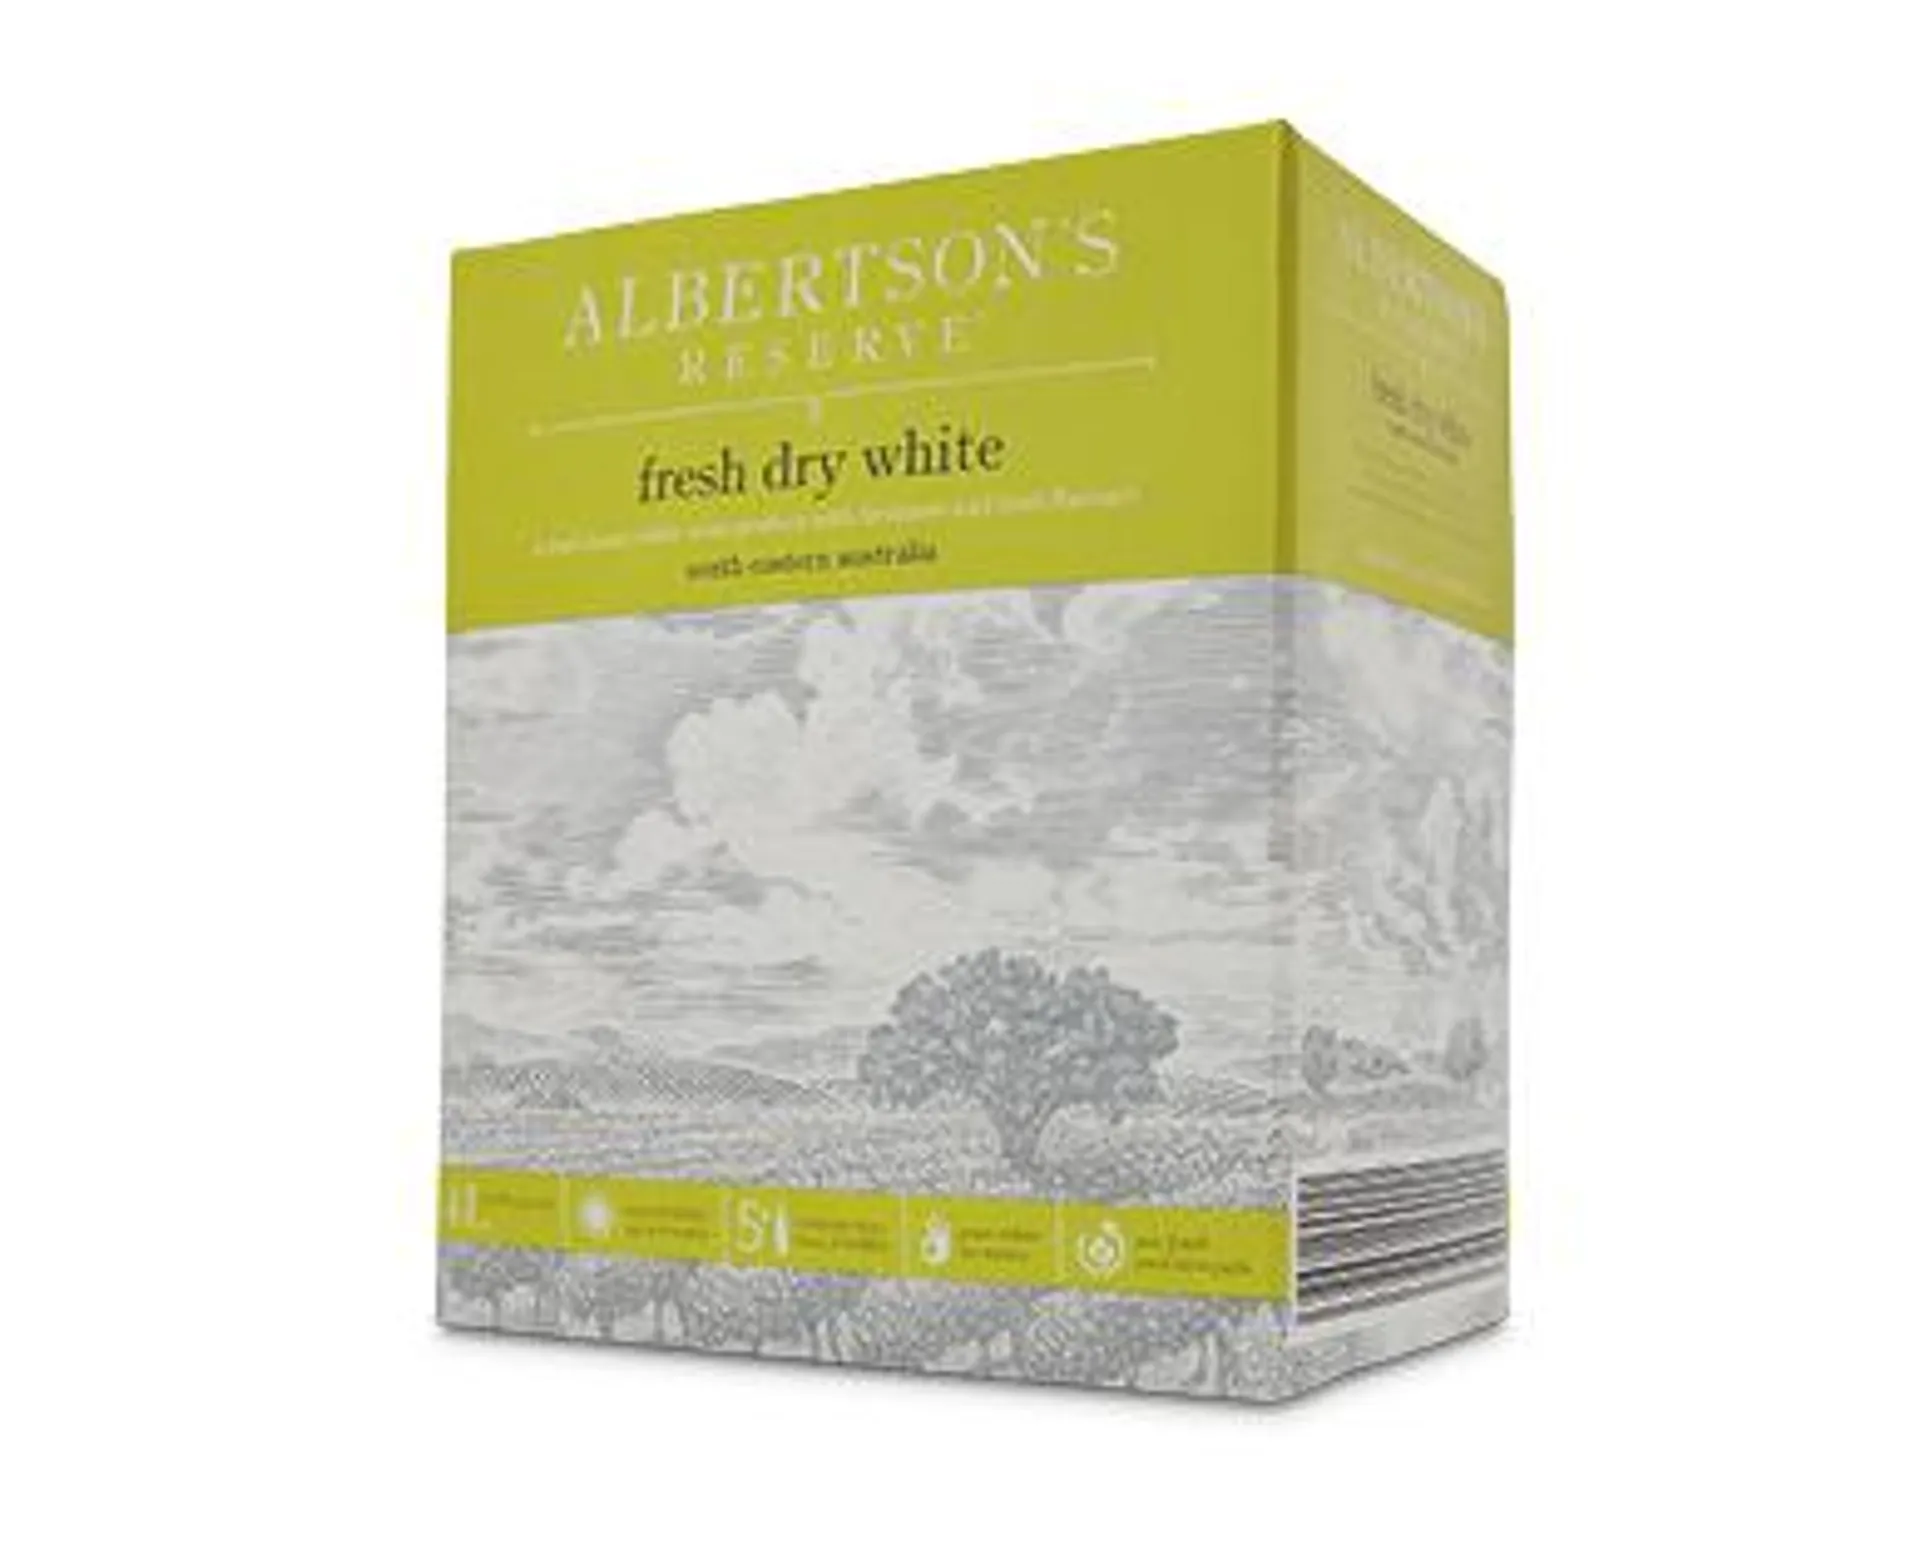 Albertson's Reserve Crisp Dry White Cask 4L